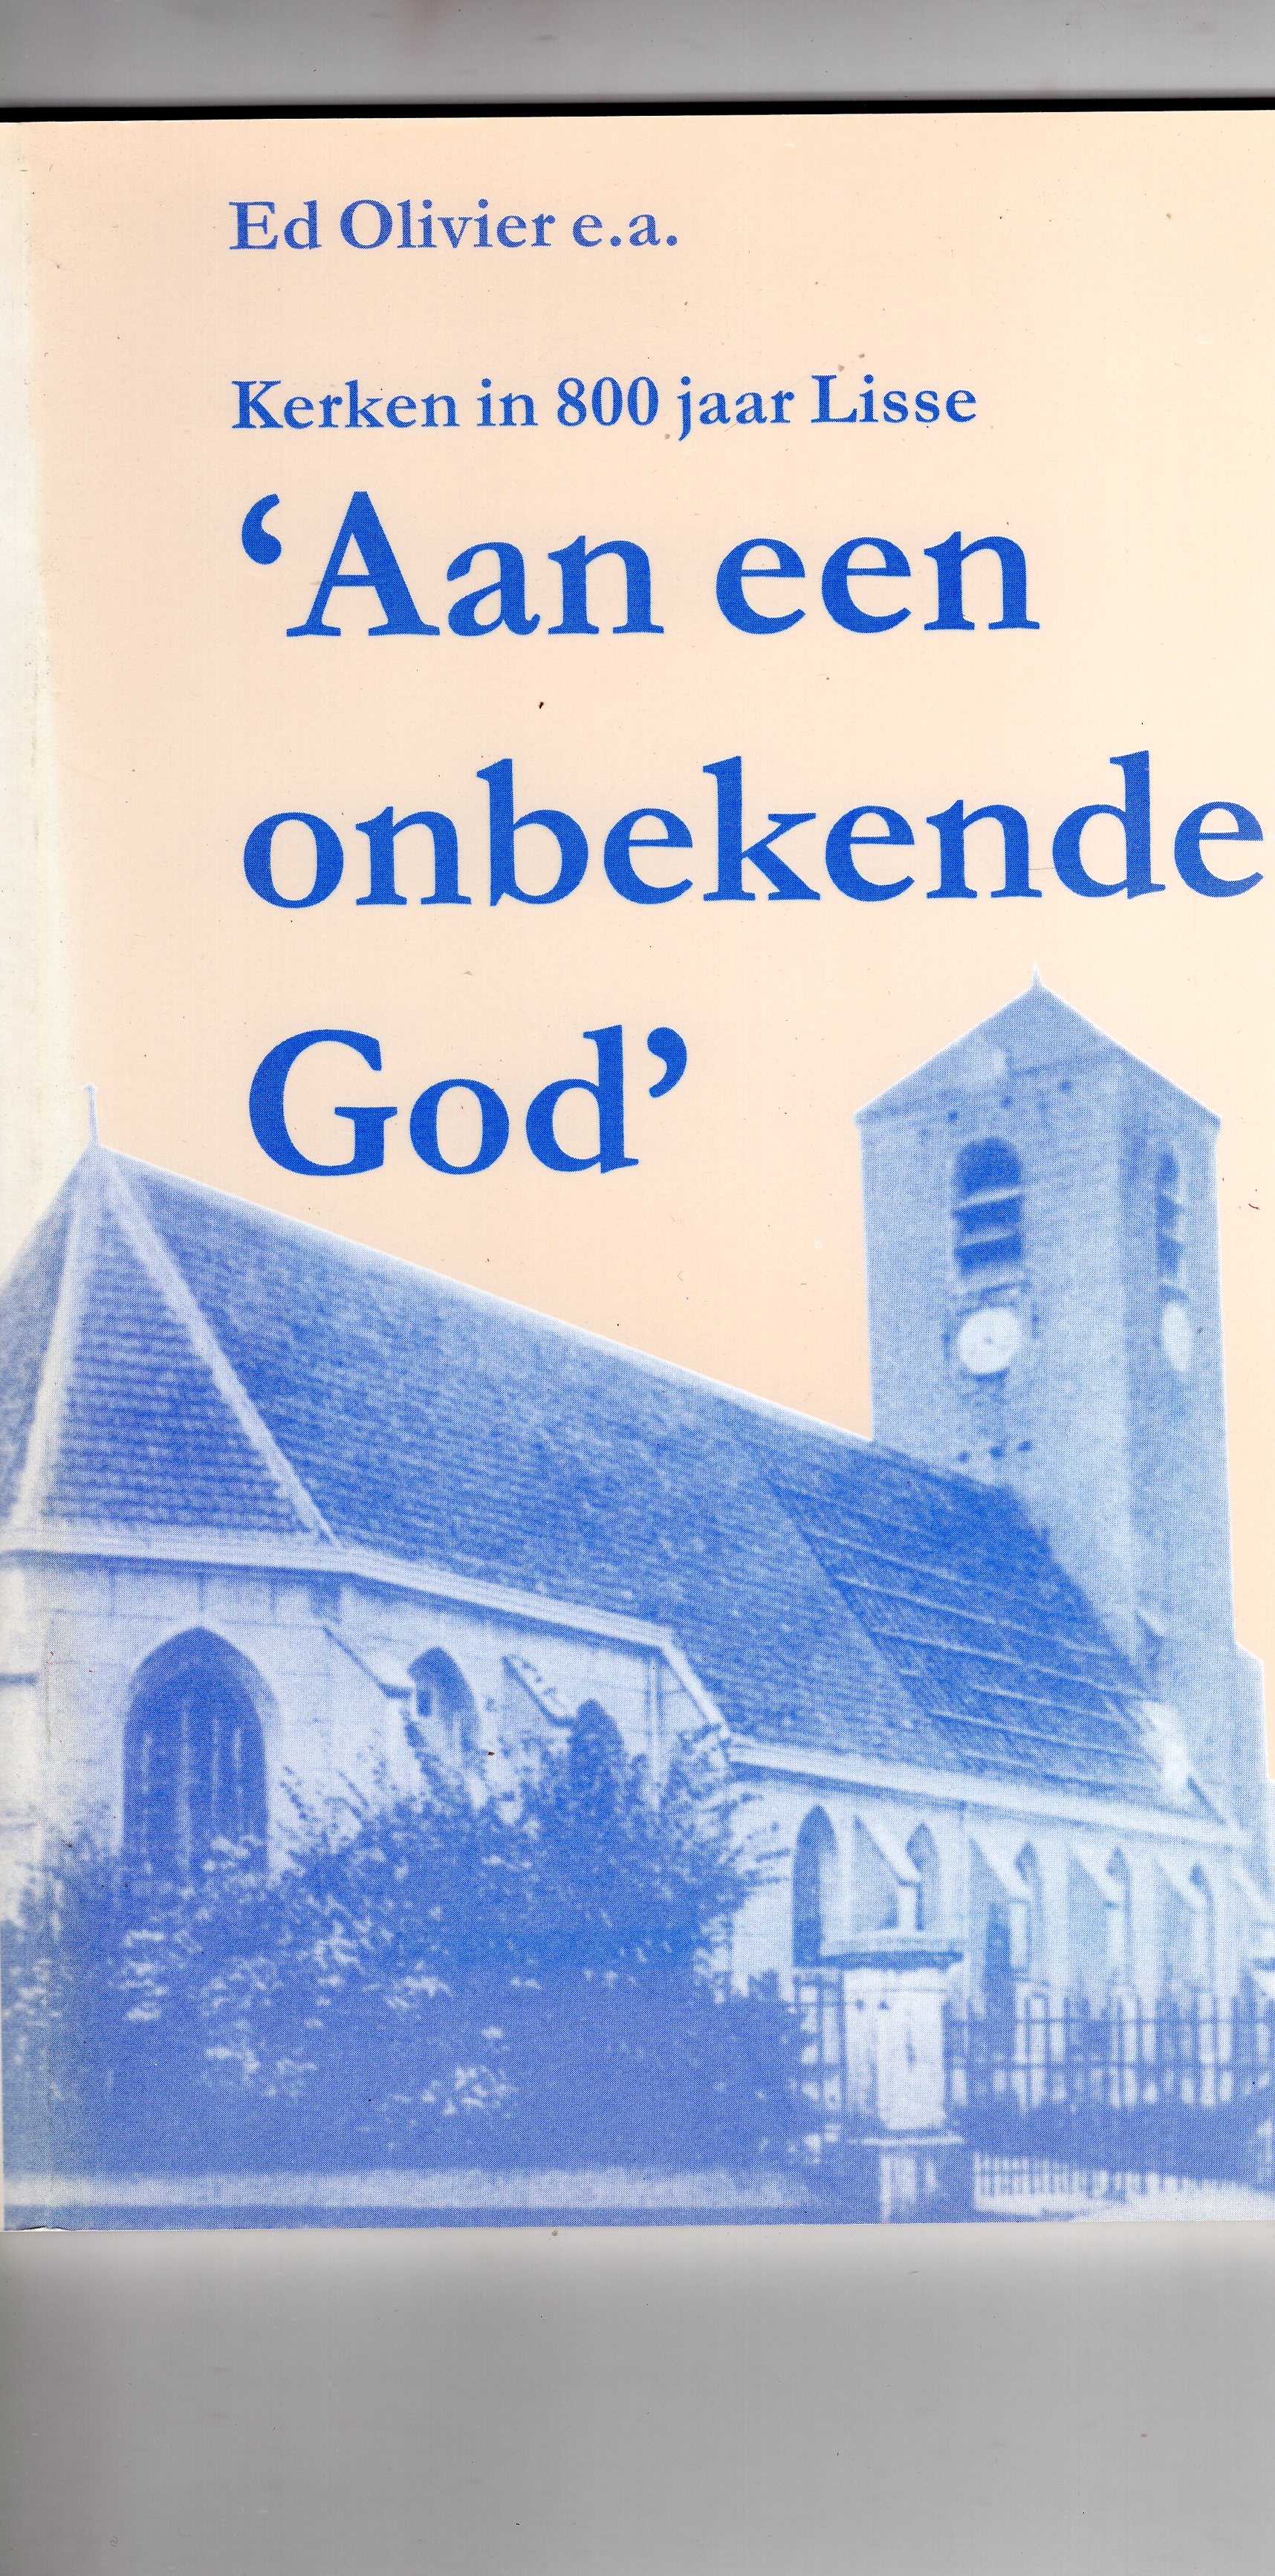 Olivier Ed. e.a. - Kerken in 800 jaar Lisse; Aan een onbekende God; 